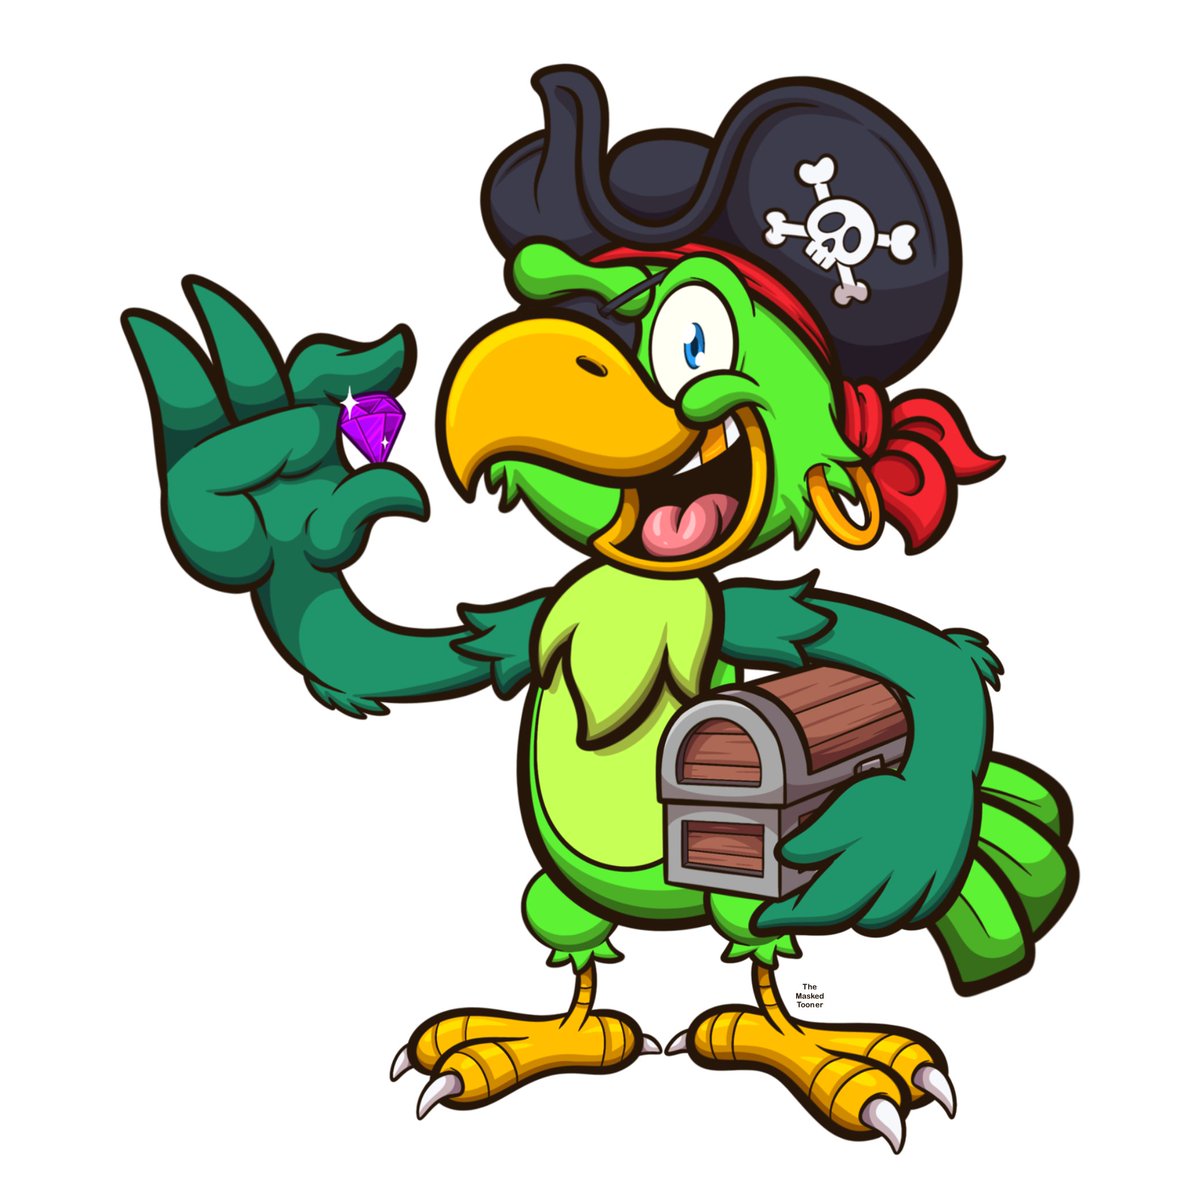 Pirate parrot with treasure chest ☠️🦜
-
#parrot #bird #tropical #animal #wildlife #nature #greenparrot #pirate #treasure #arrr #ahoy #diamond #nationaltalklikeapirateday #cartoon #themaskedtooner #vector #vectorart #stockphoto #illustration #dutchartist #characterdesign